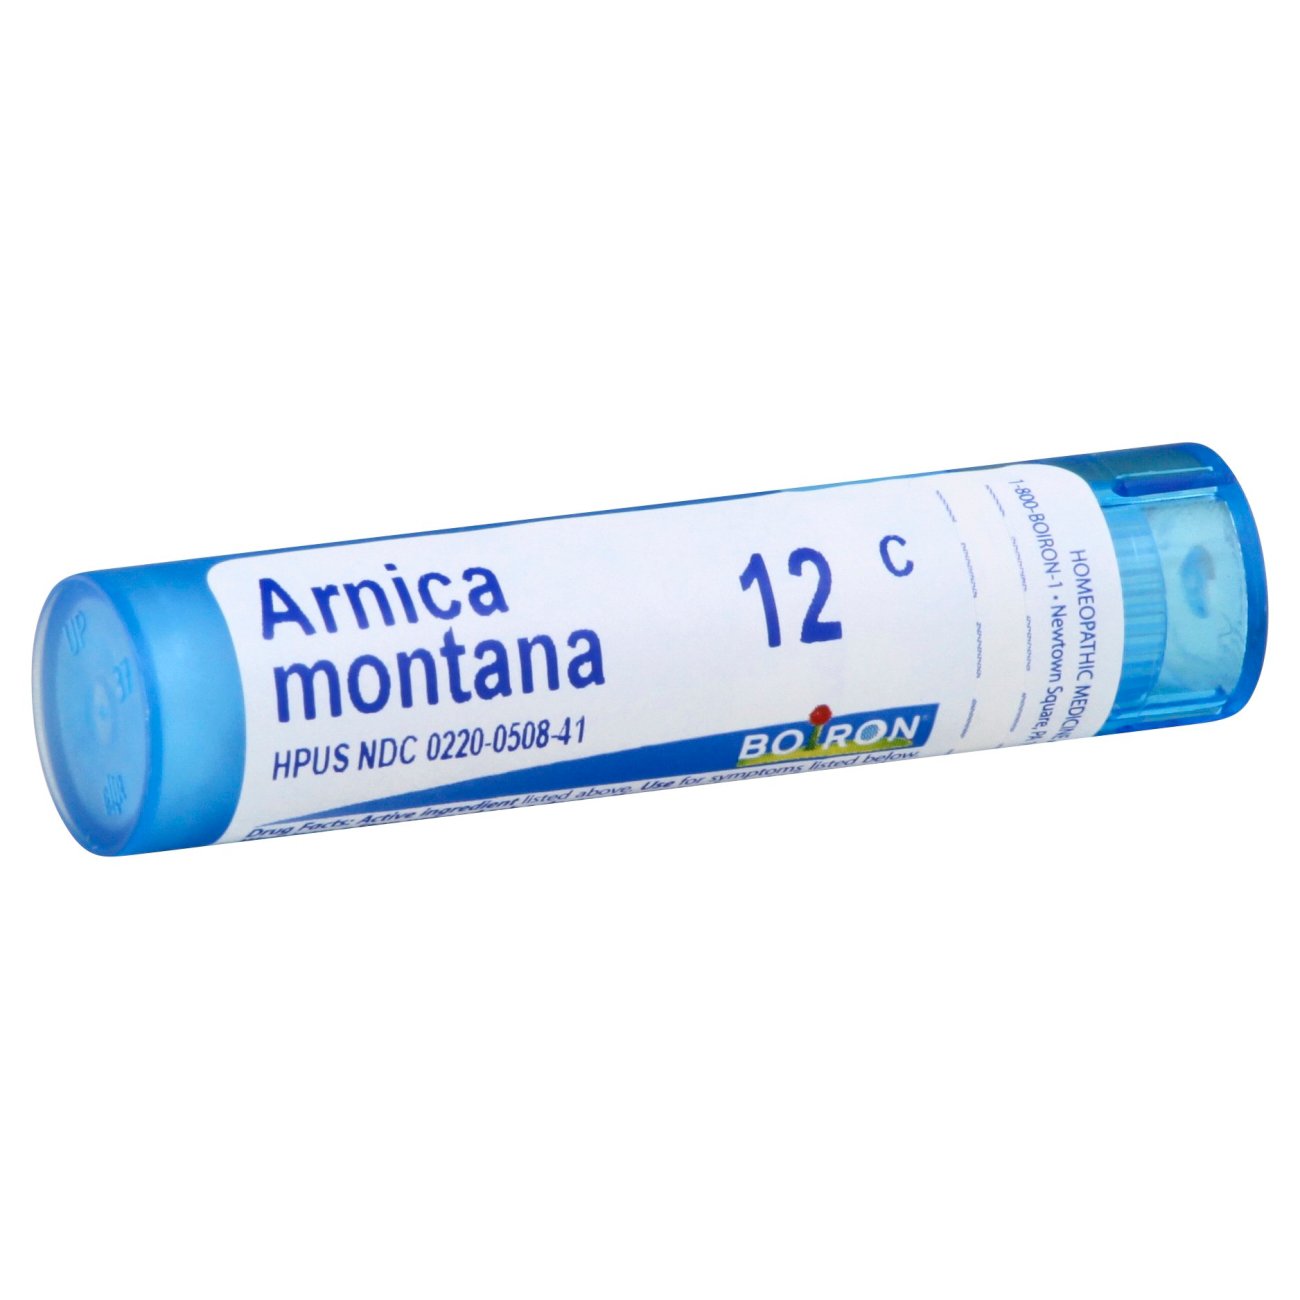 Boiron Arnica Montana Pellets Shop Vitamins Supplements At H E B